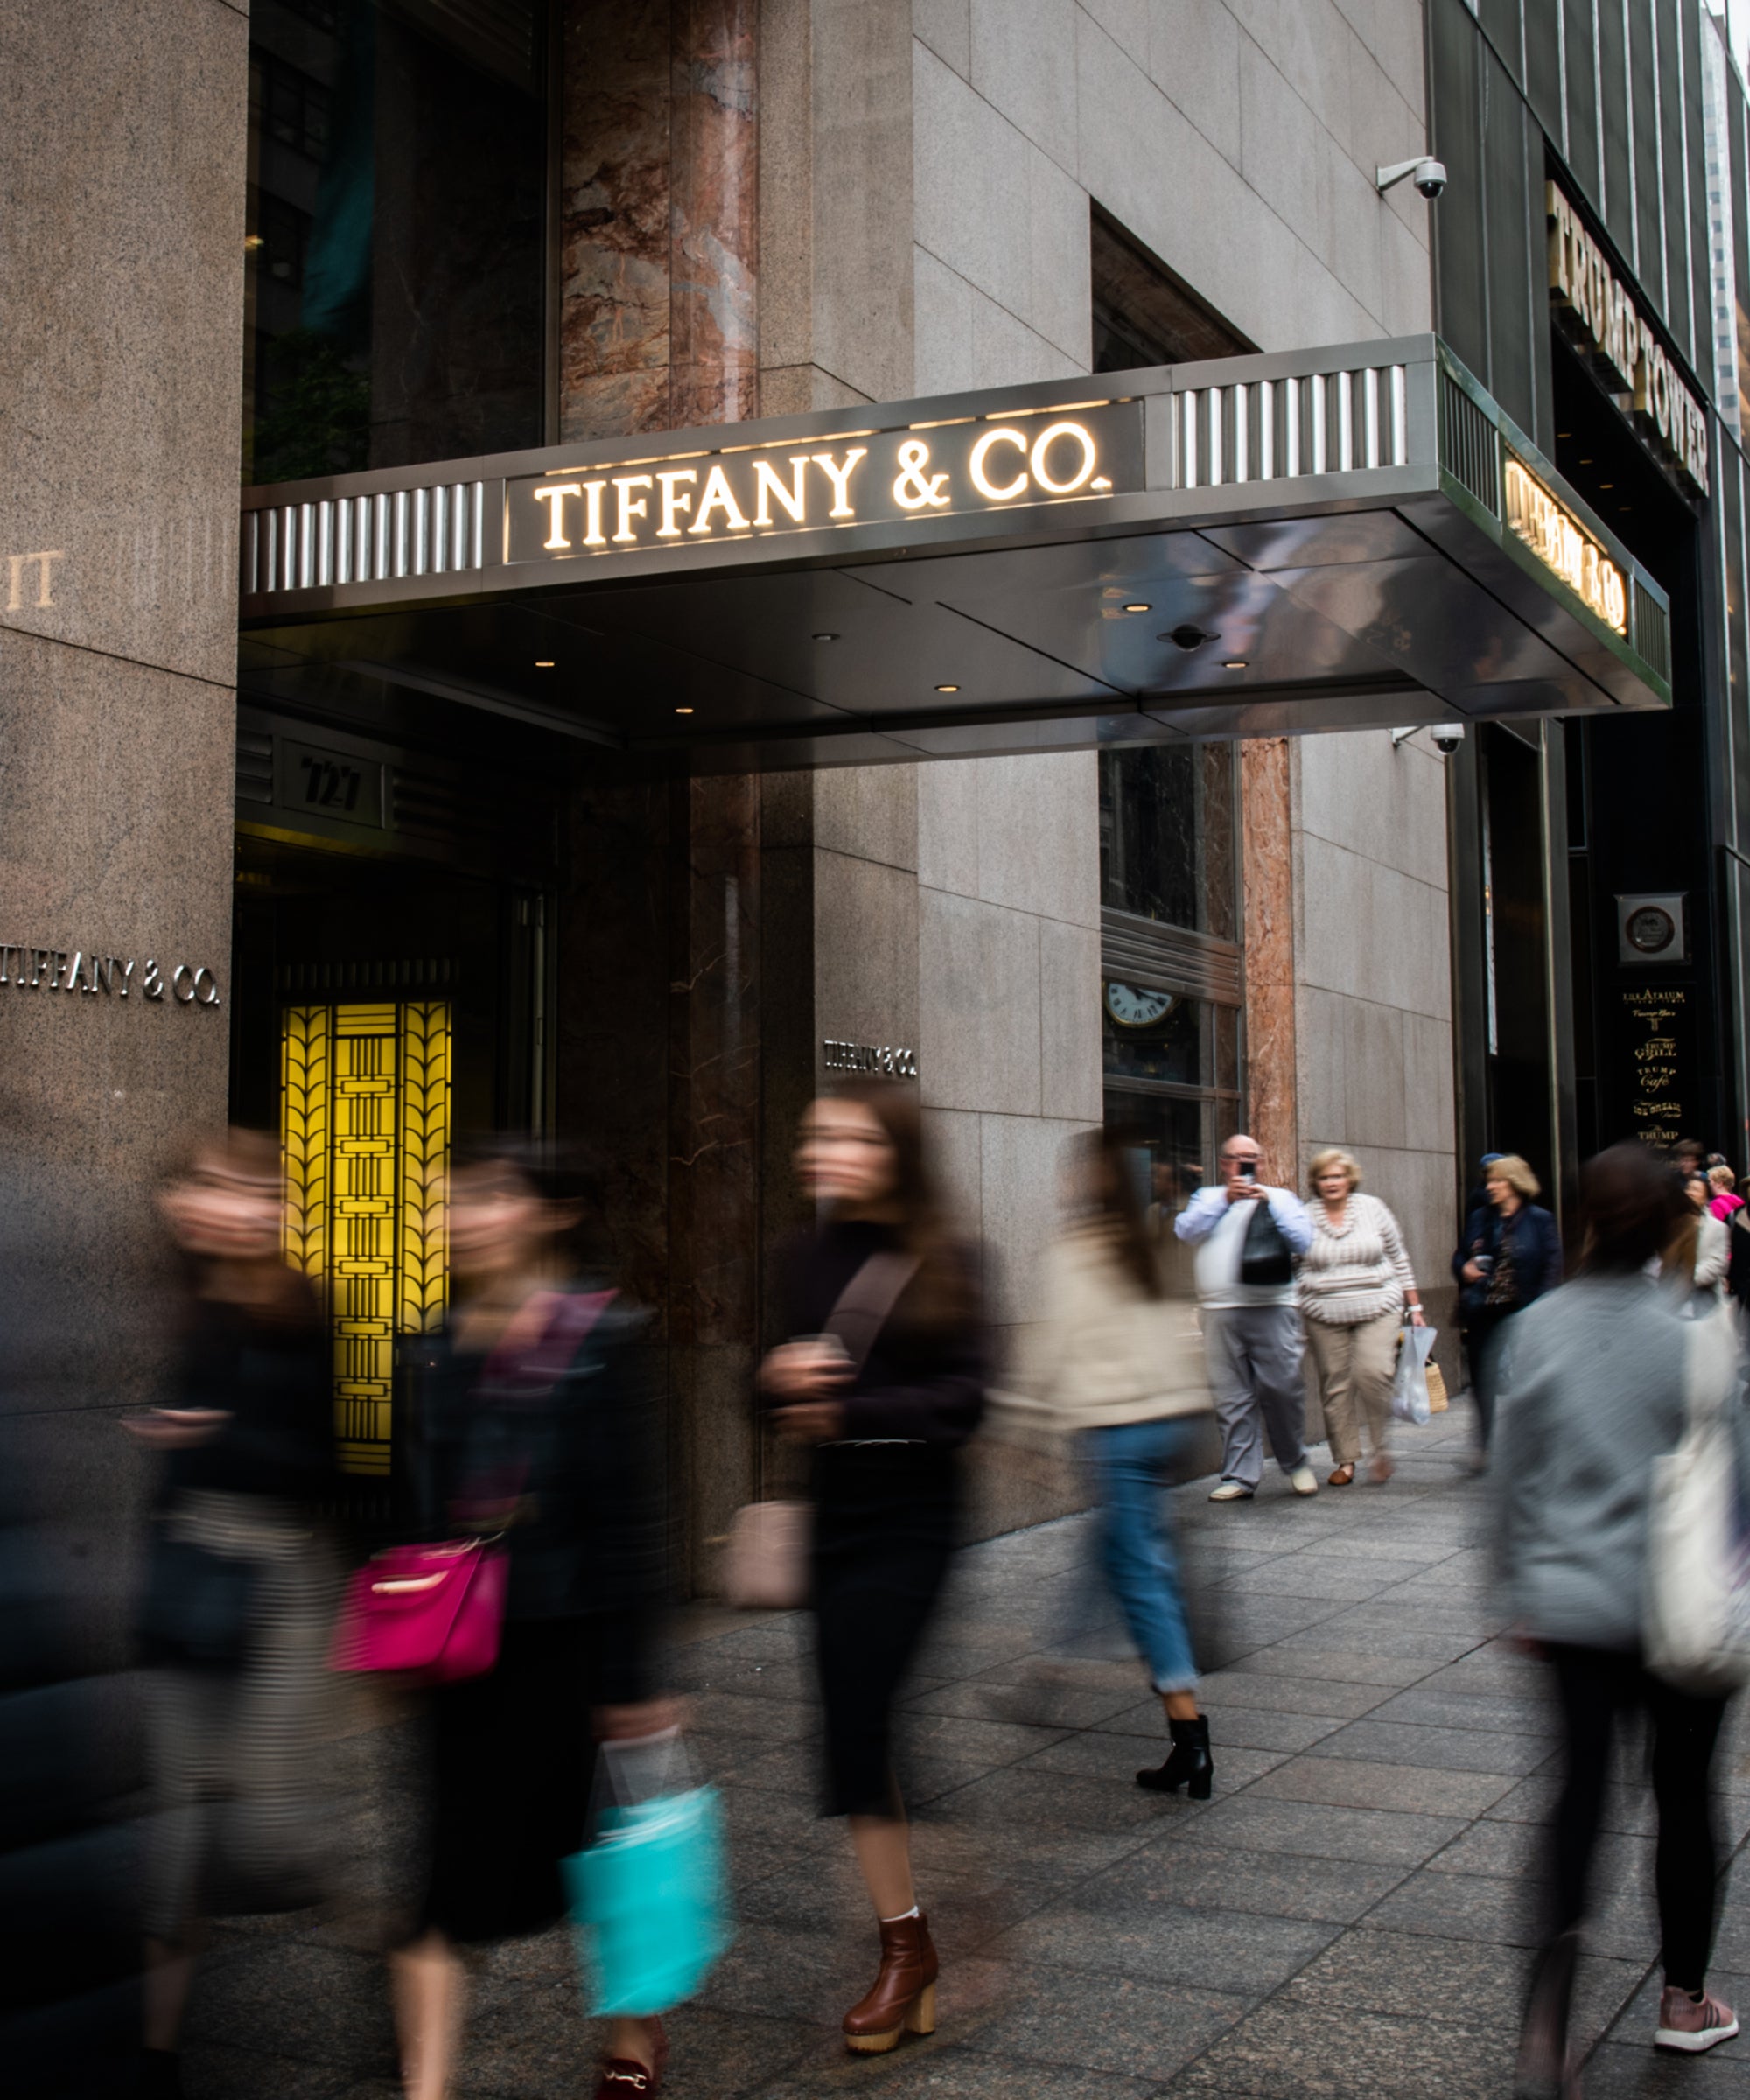 Louis Vuitton Buy Tiffany For $16.2 Billion